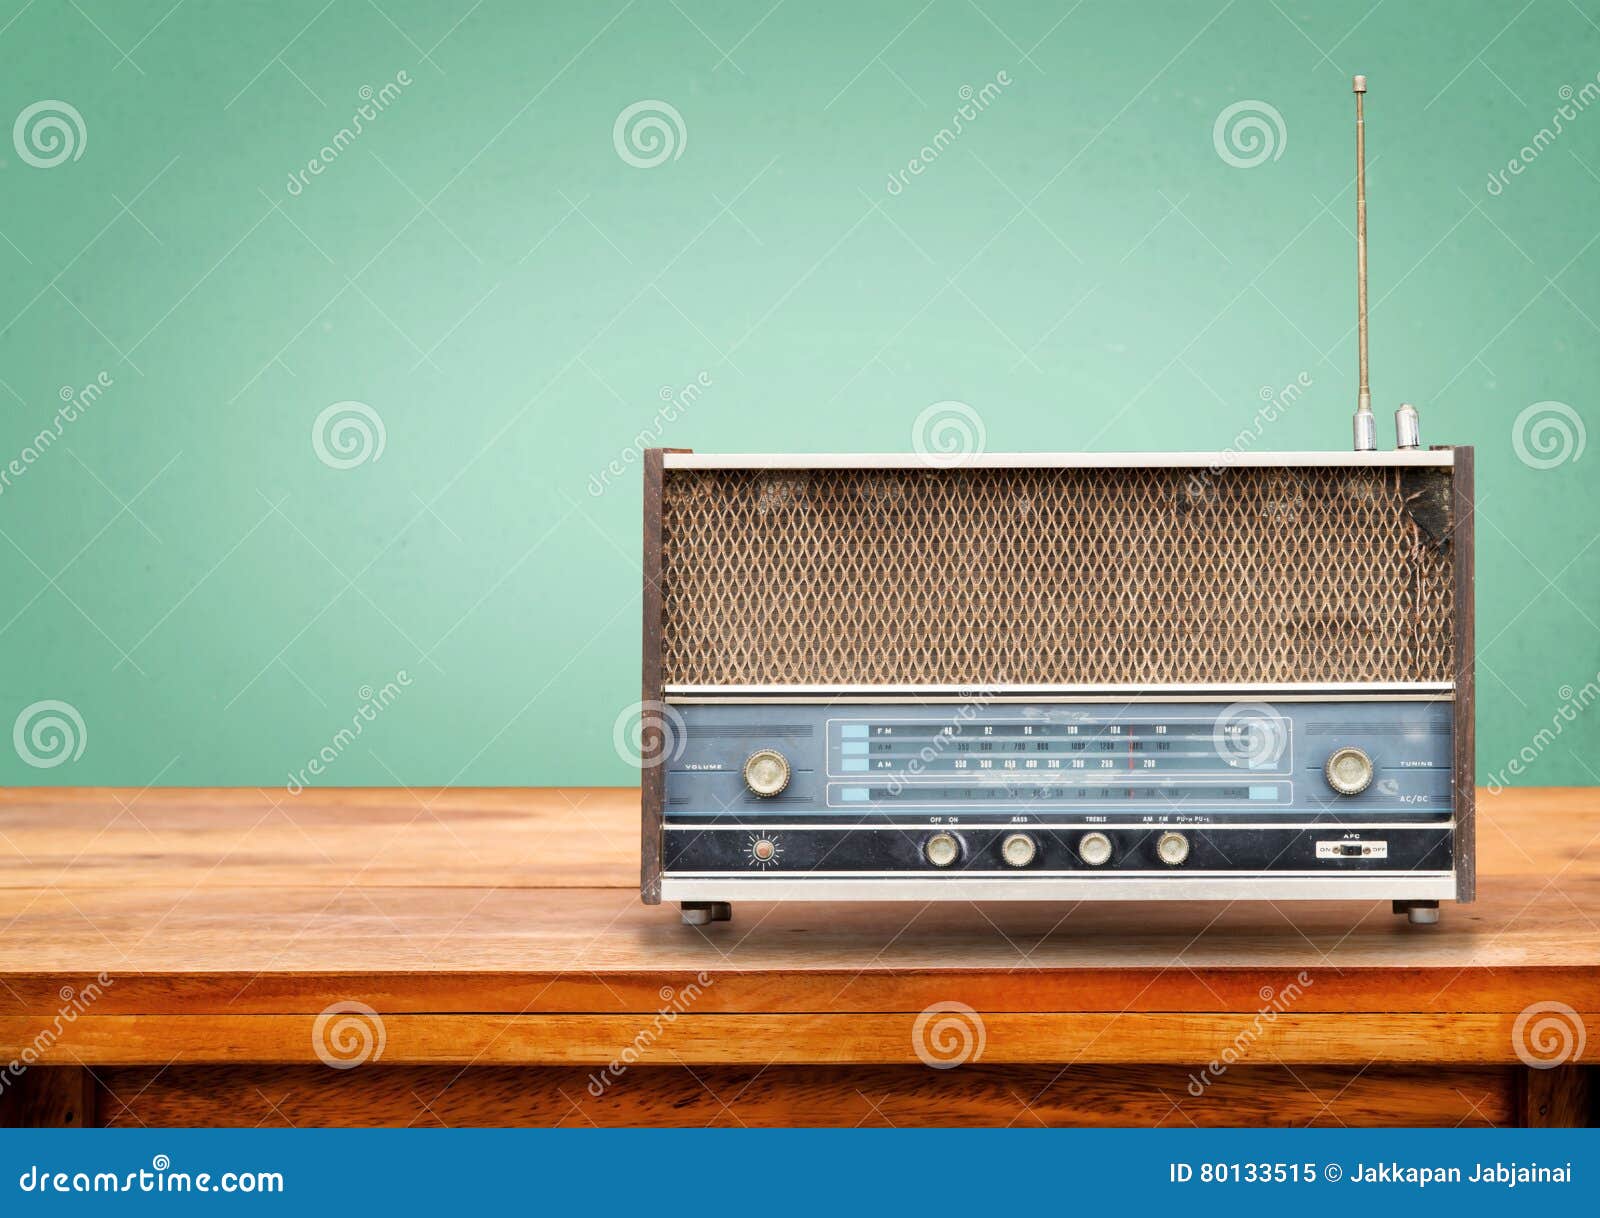 old retro radio on table